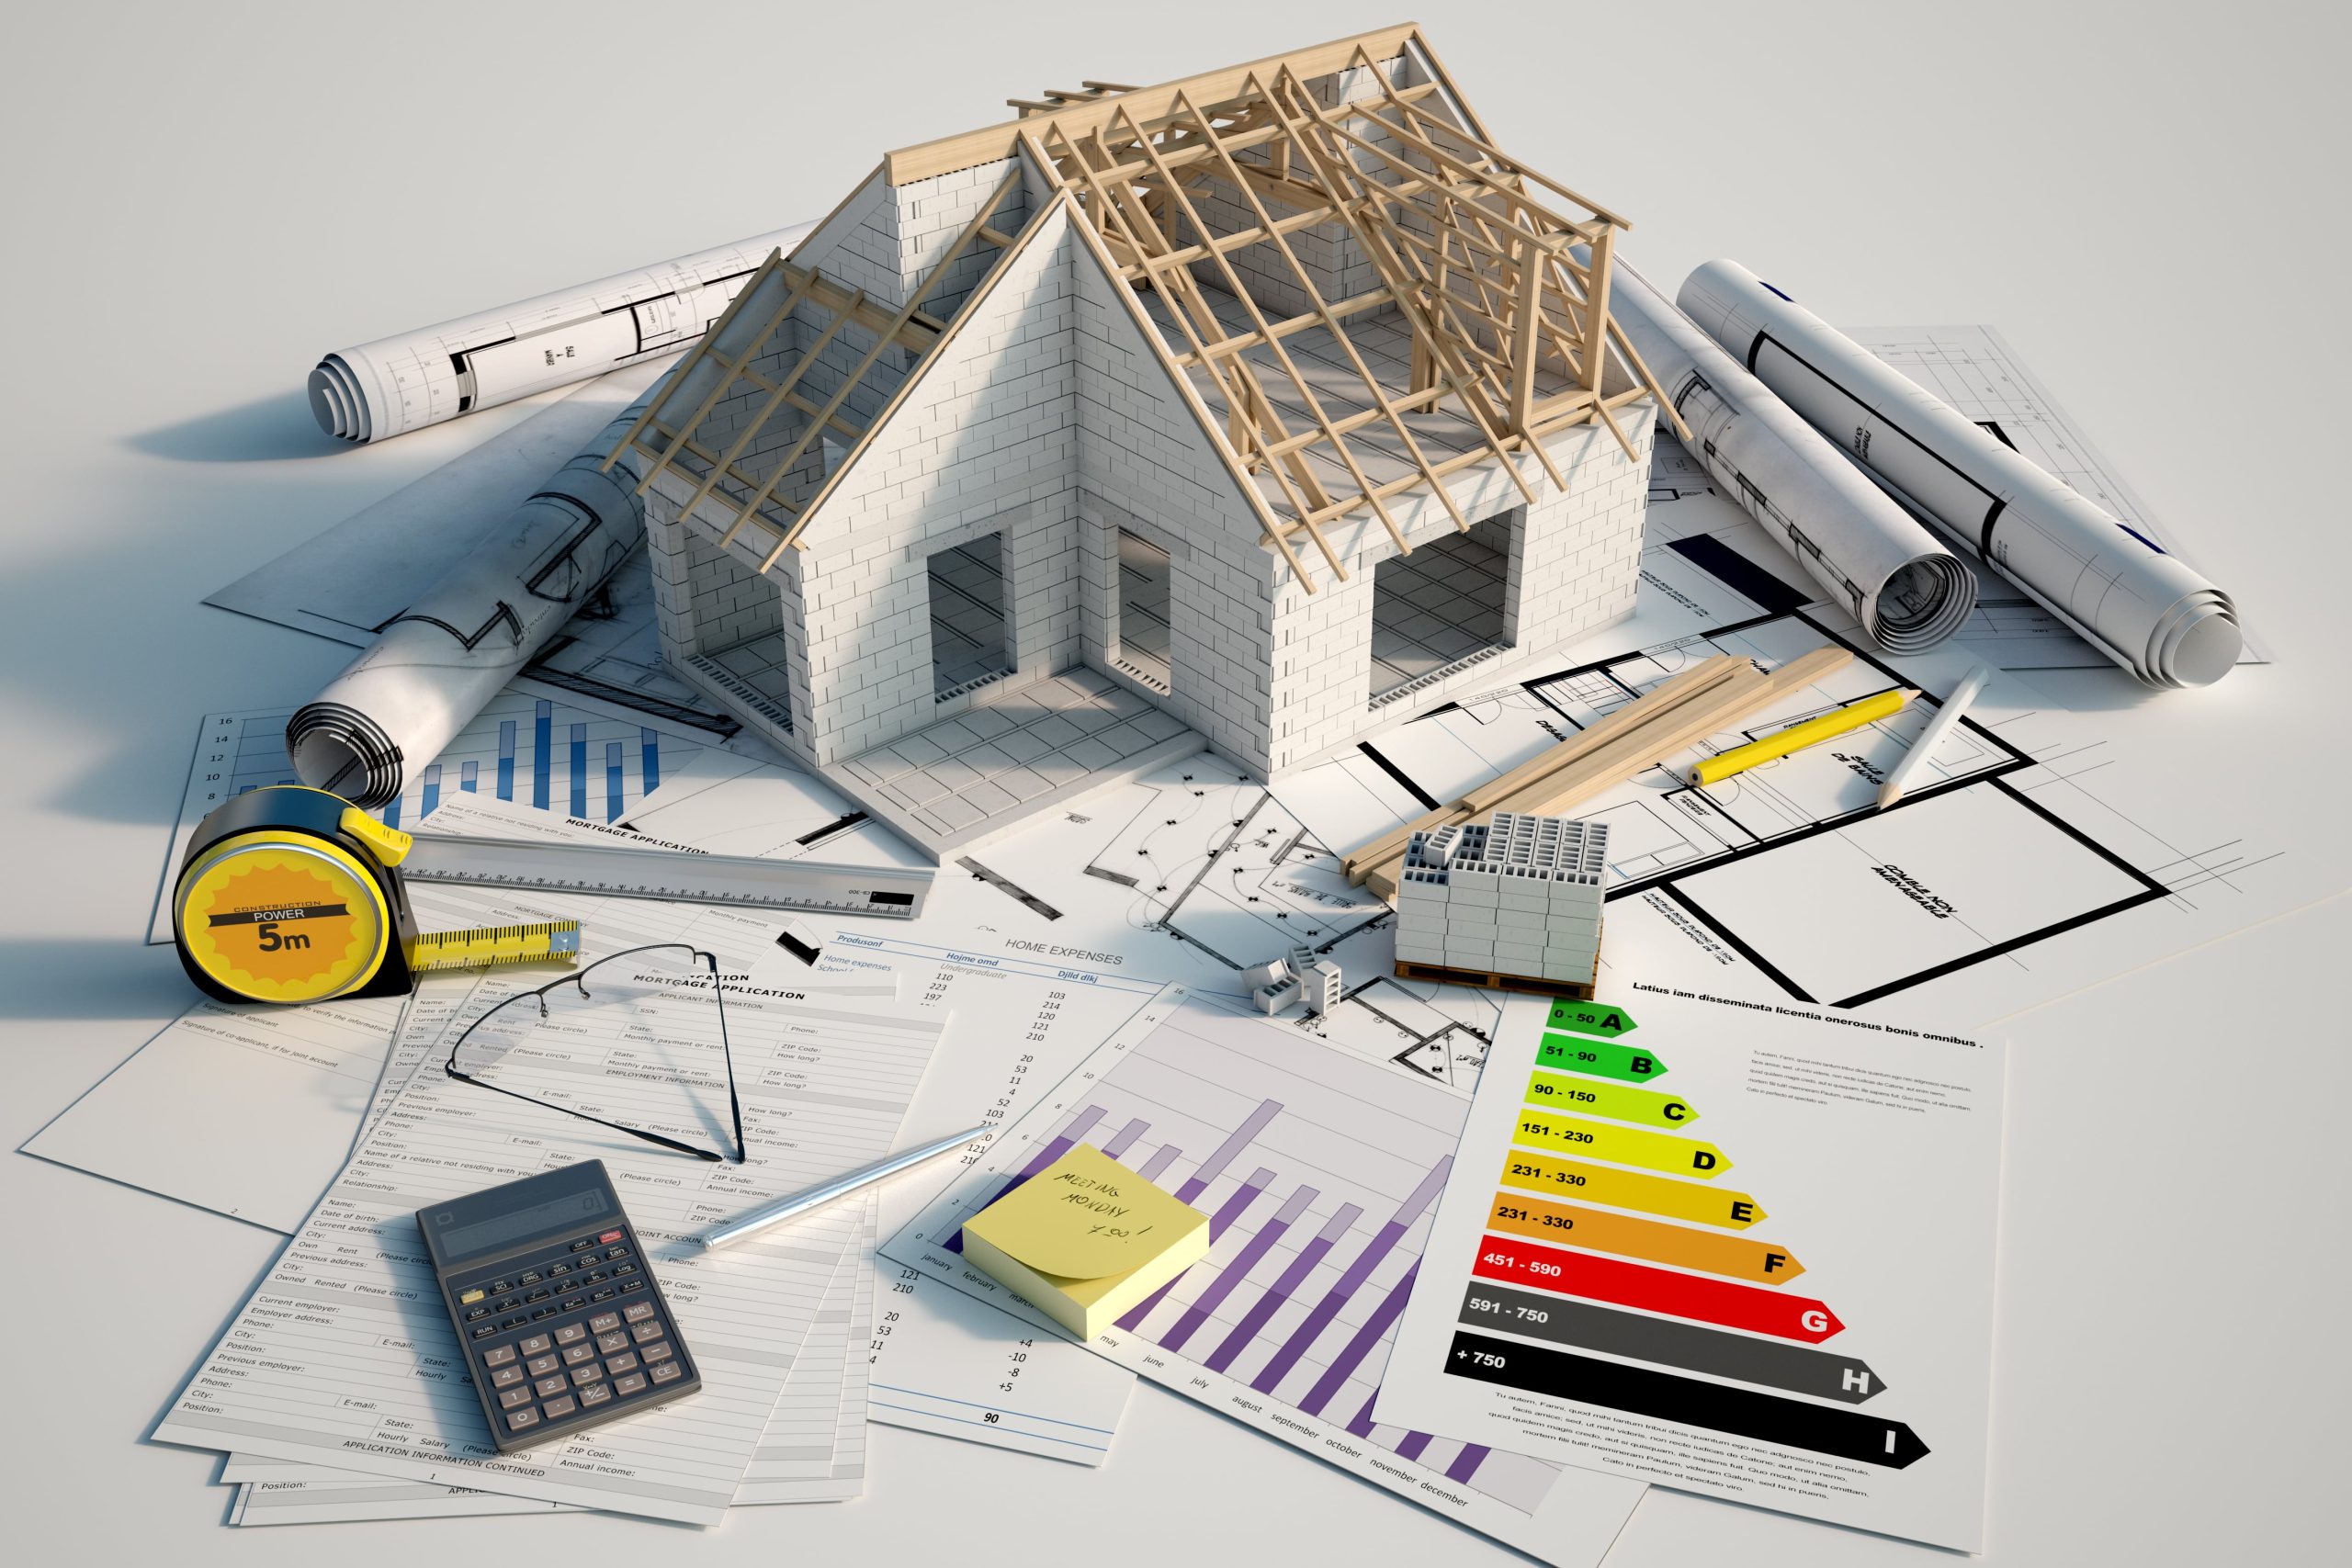 Properties Should Meet Minimum Energy Efficiency Standards When Sold